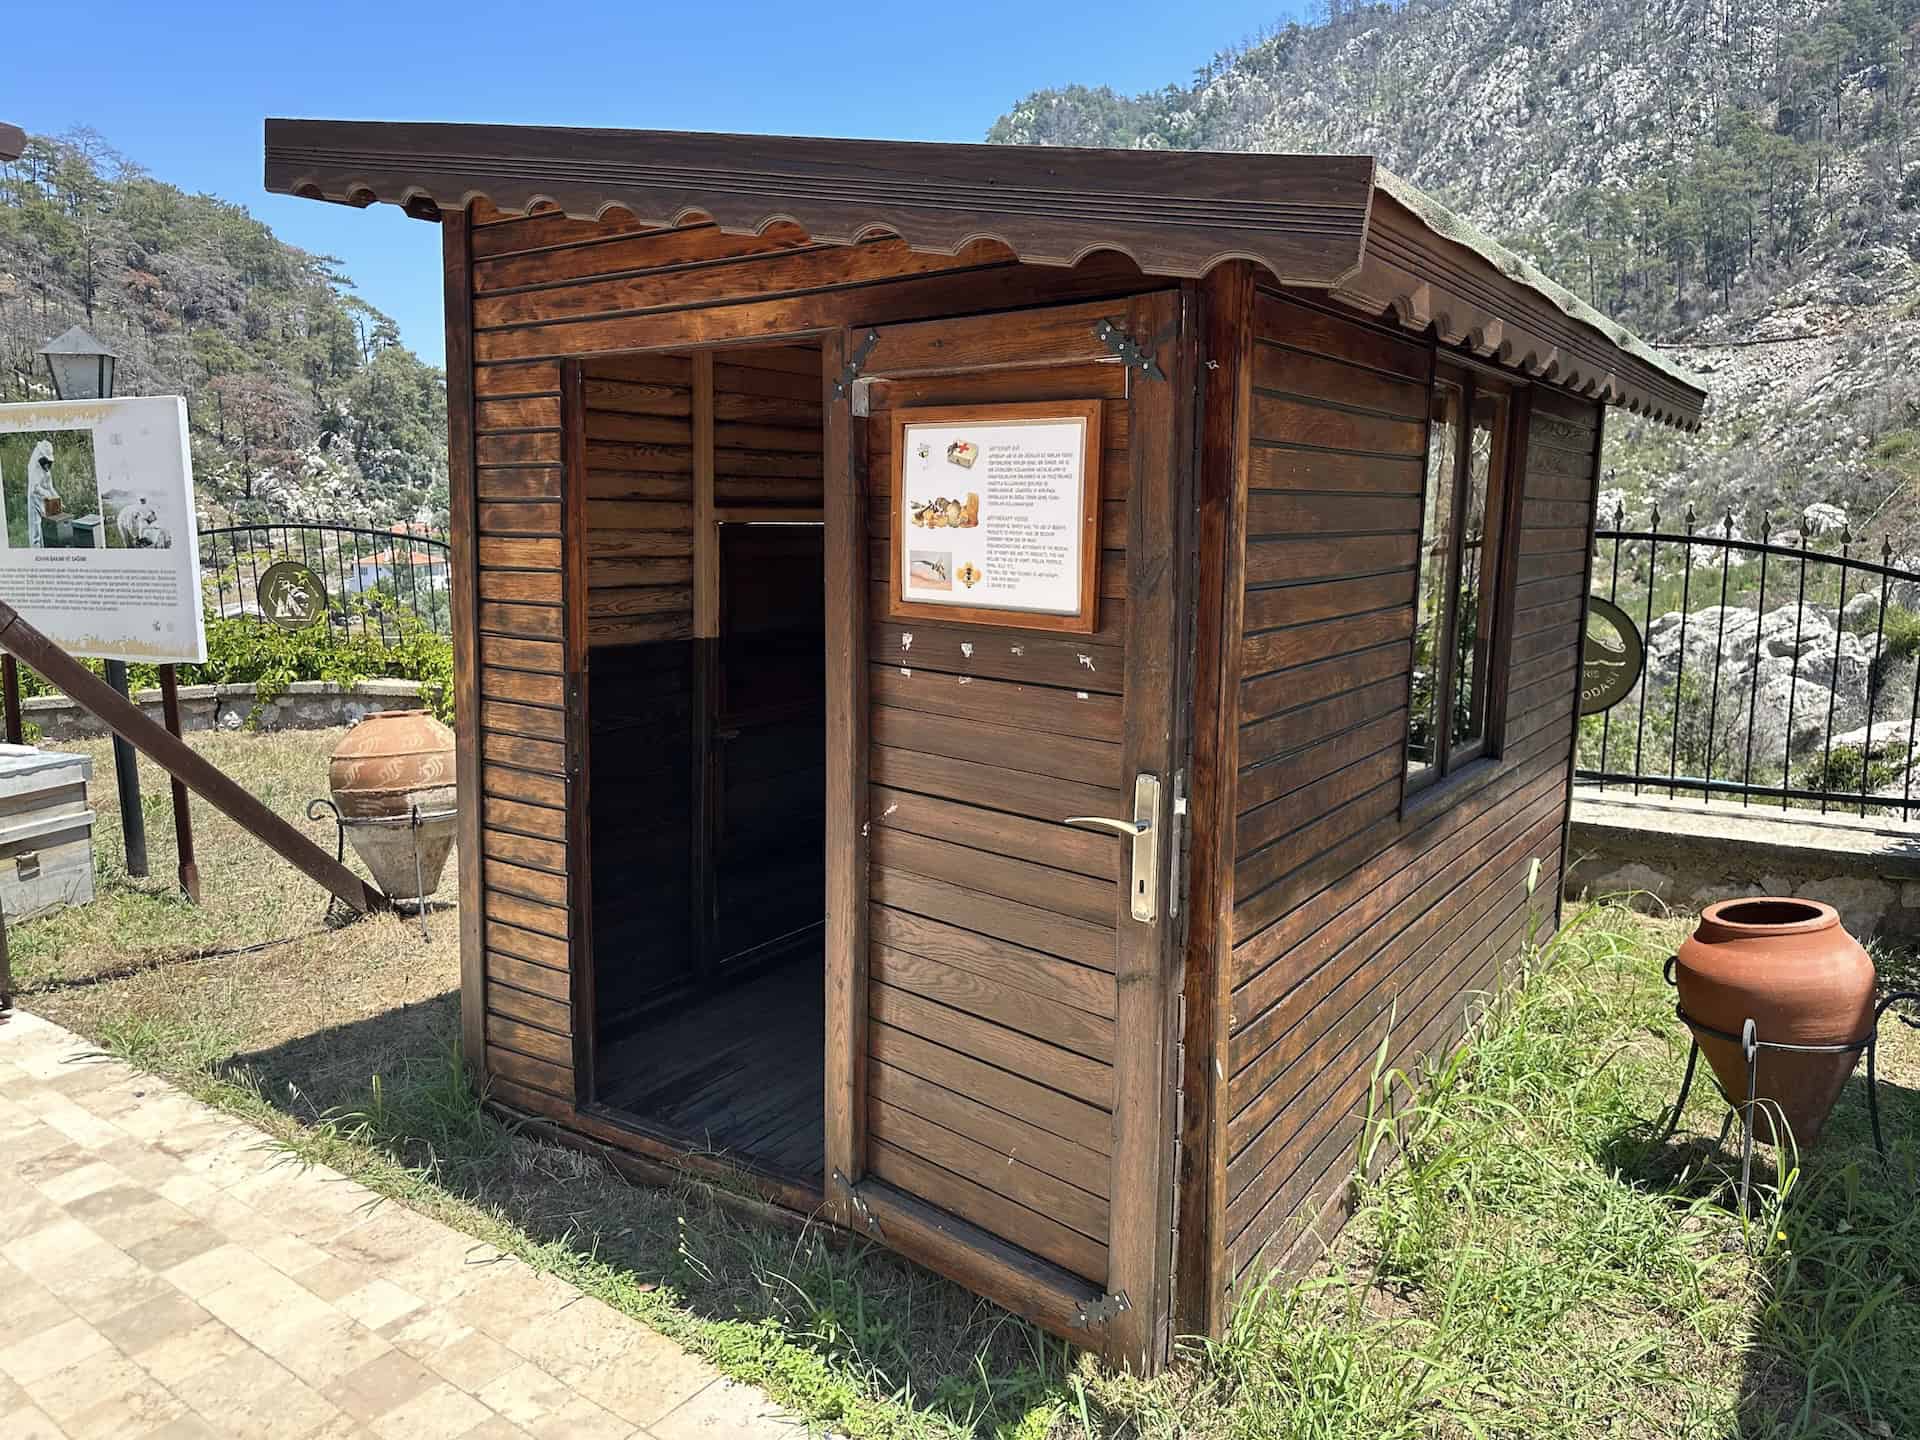 Second apitherapy house at the Marmaris Honey House on the Bozburun Peninsula, Turkey